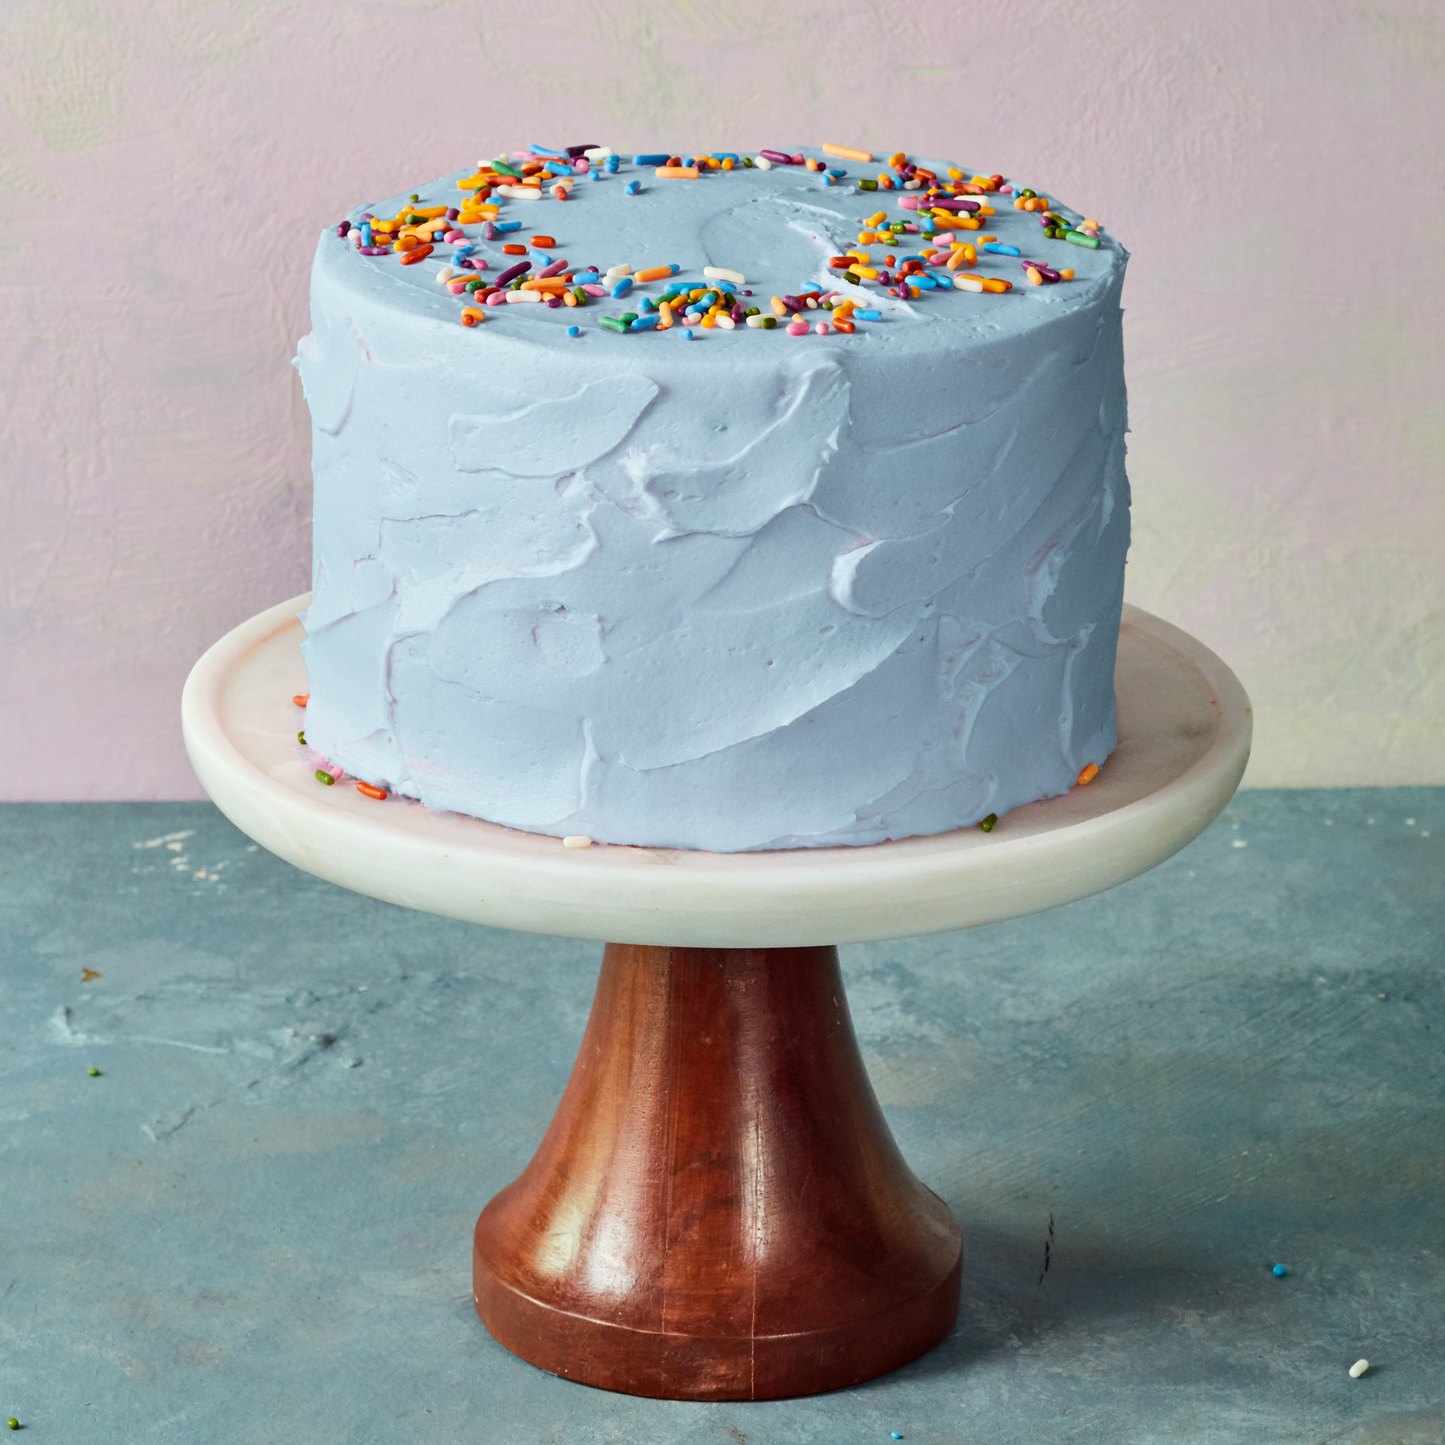 Blue birthday cake with sprinkles